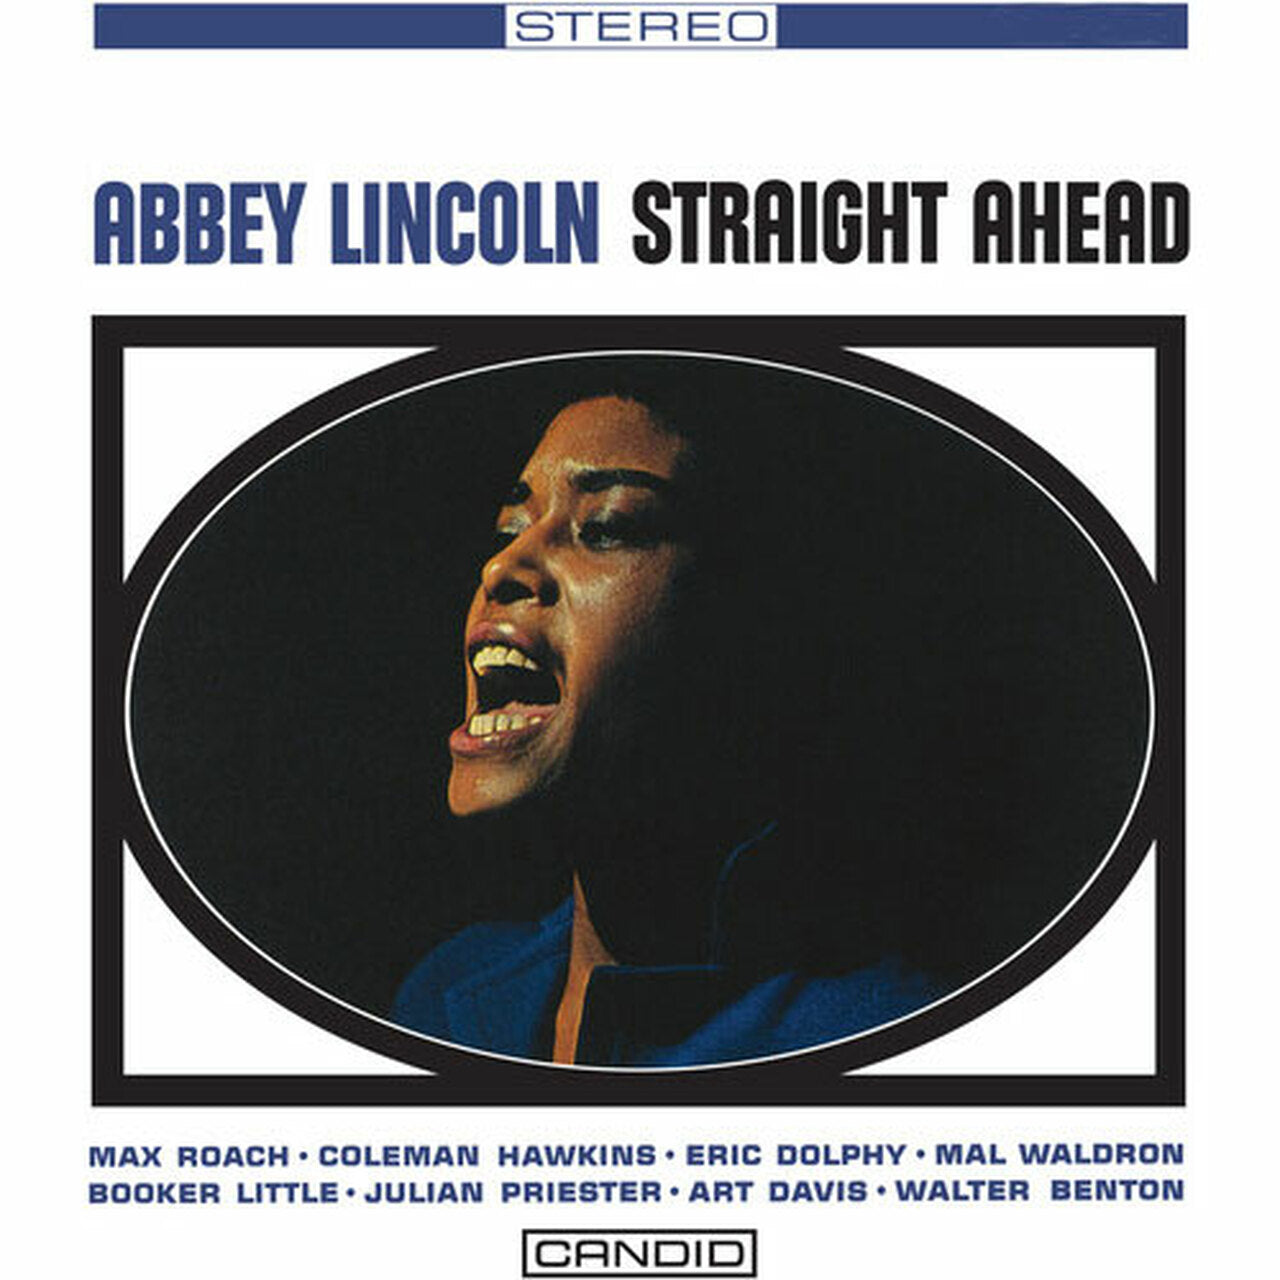 ABBEY LINCOLN - Straight Ahead (Candid Repress) - LP - 180g Vinyl